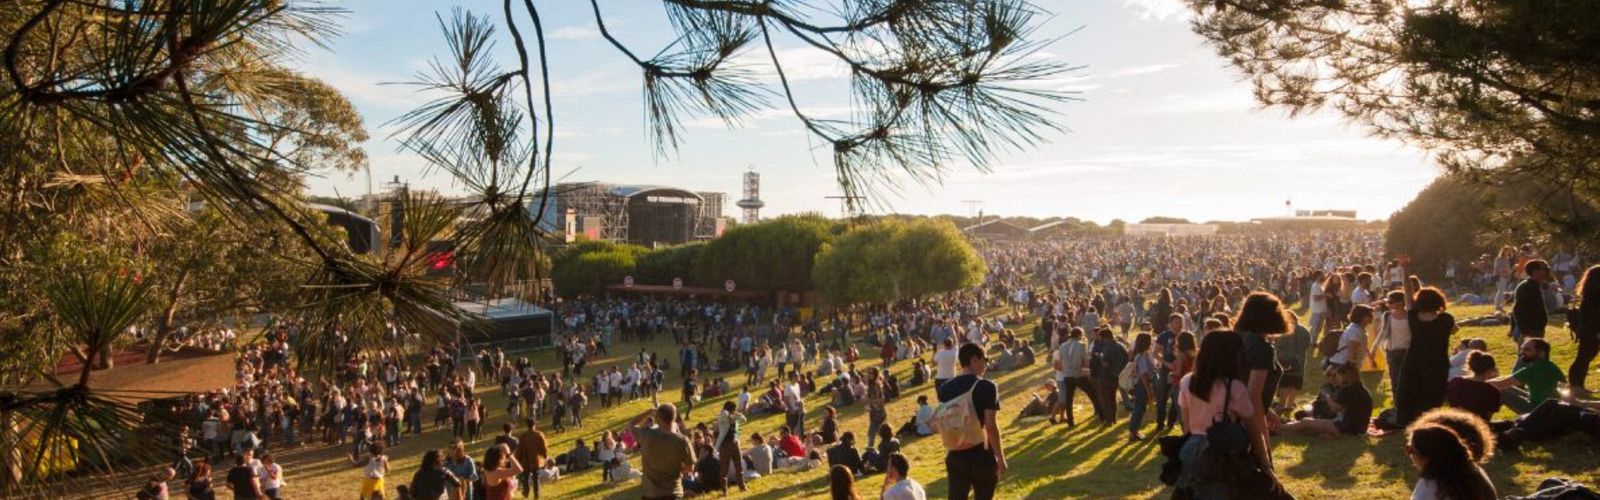 Top 10 Music Festivals in Portugal 2020